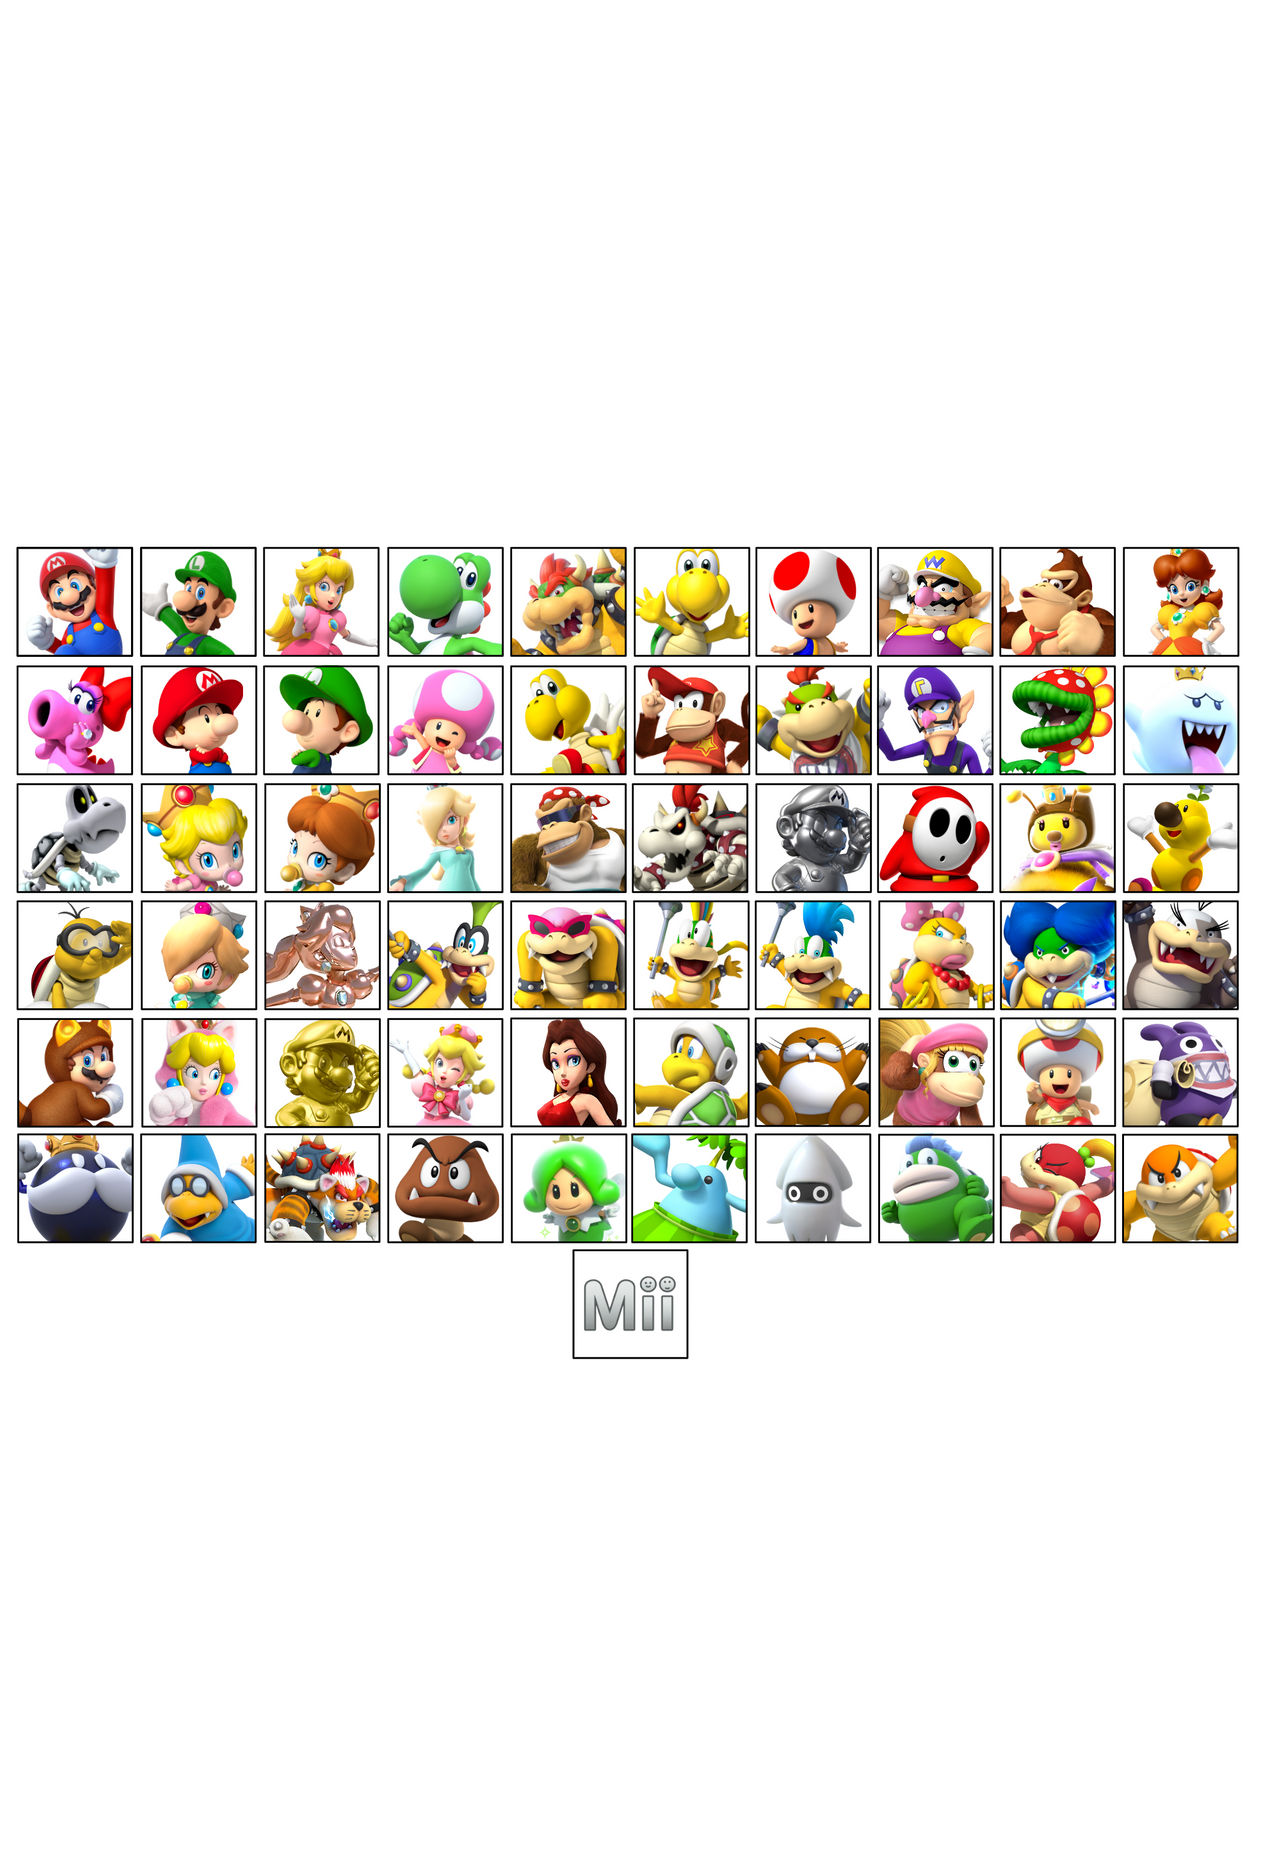 Predicting Mario kart tour: Characters